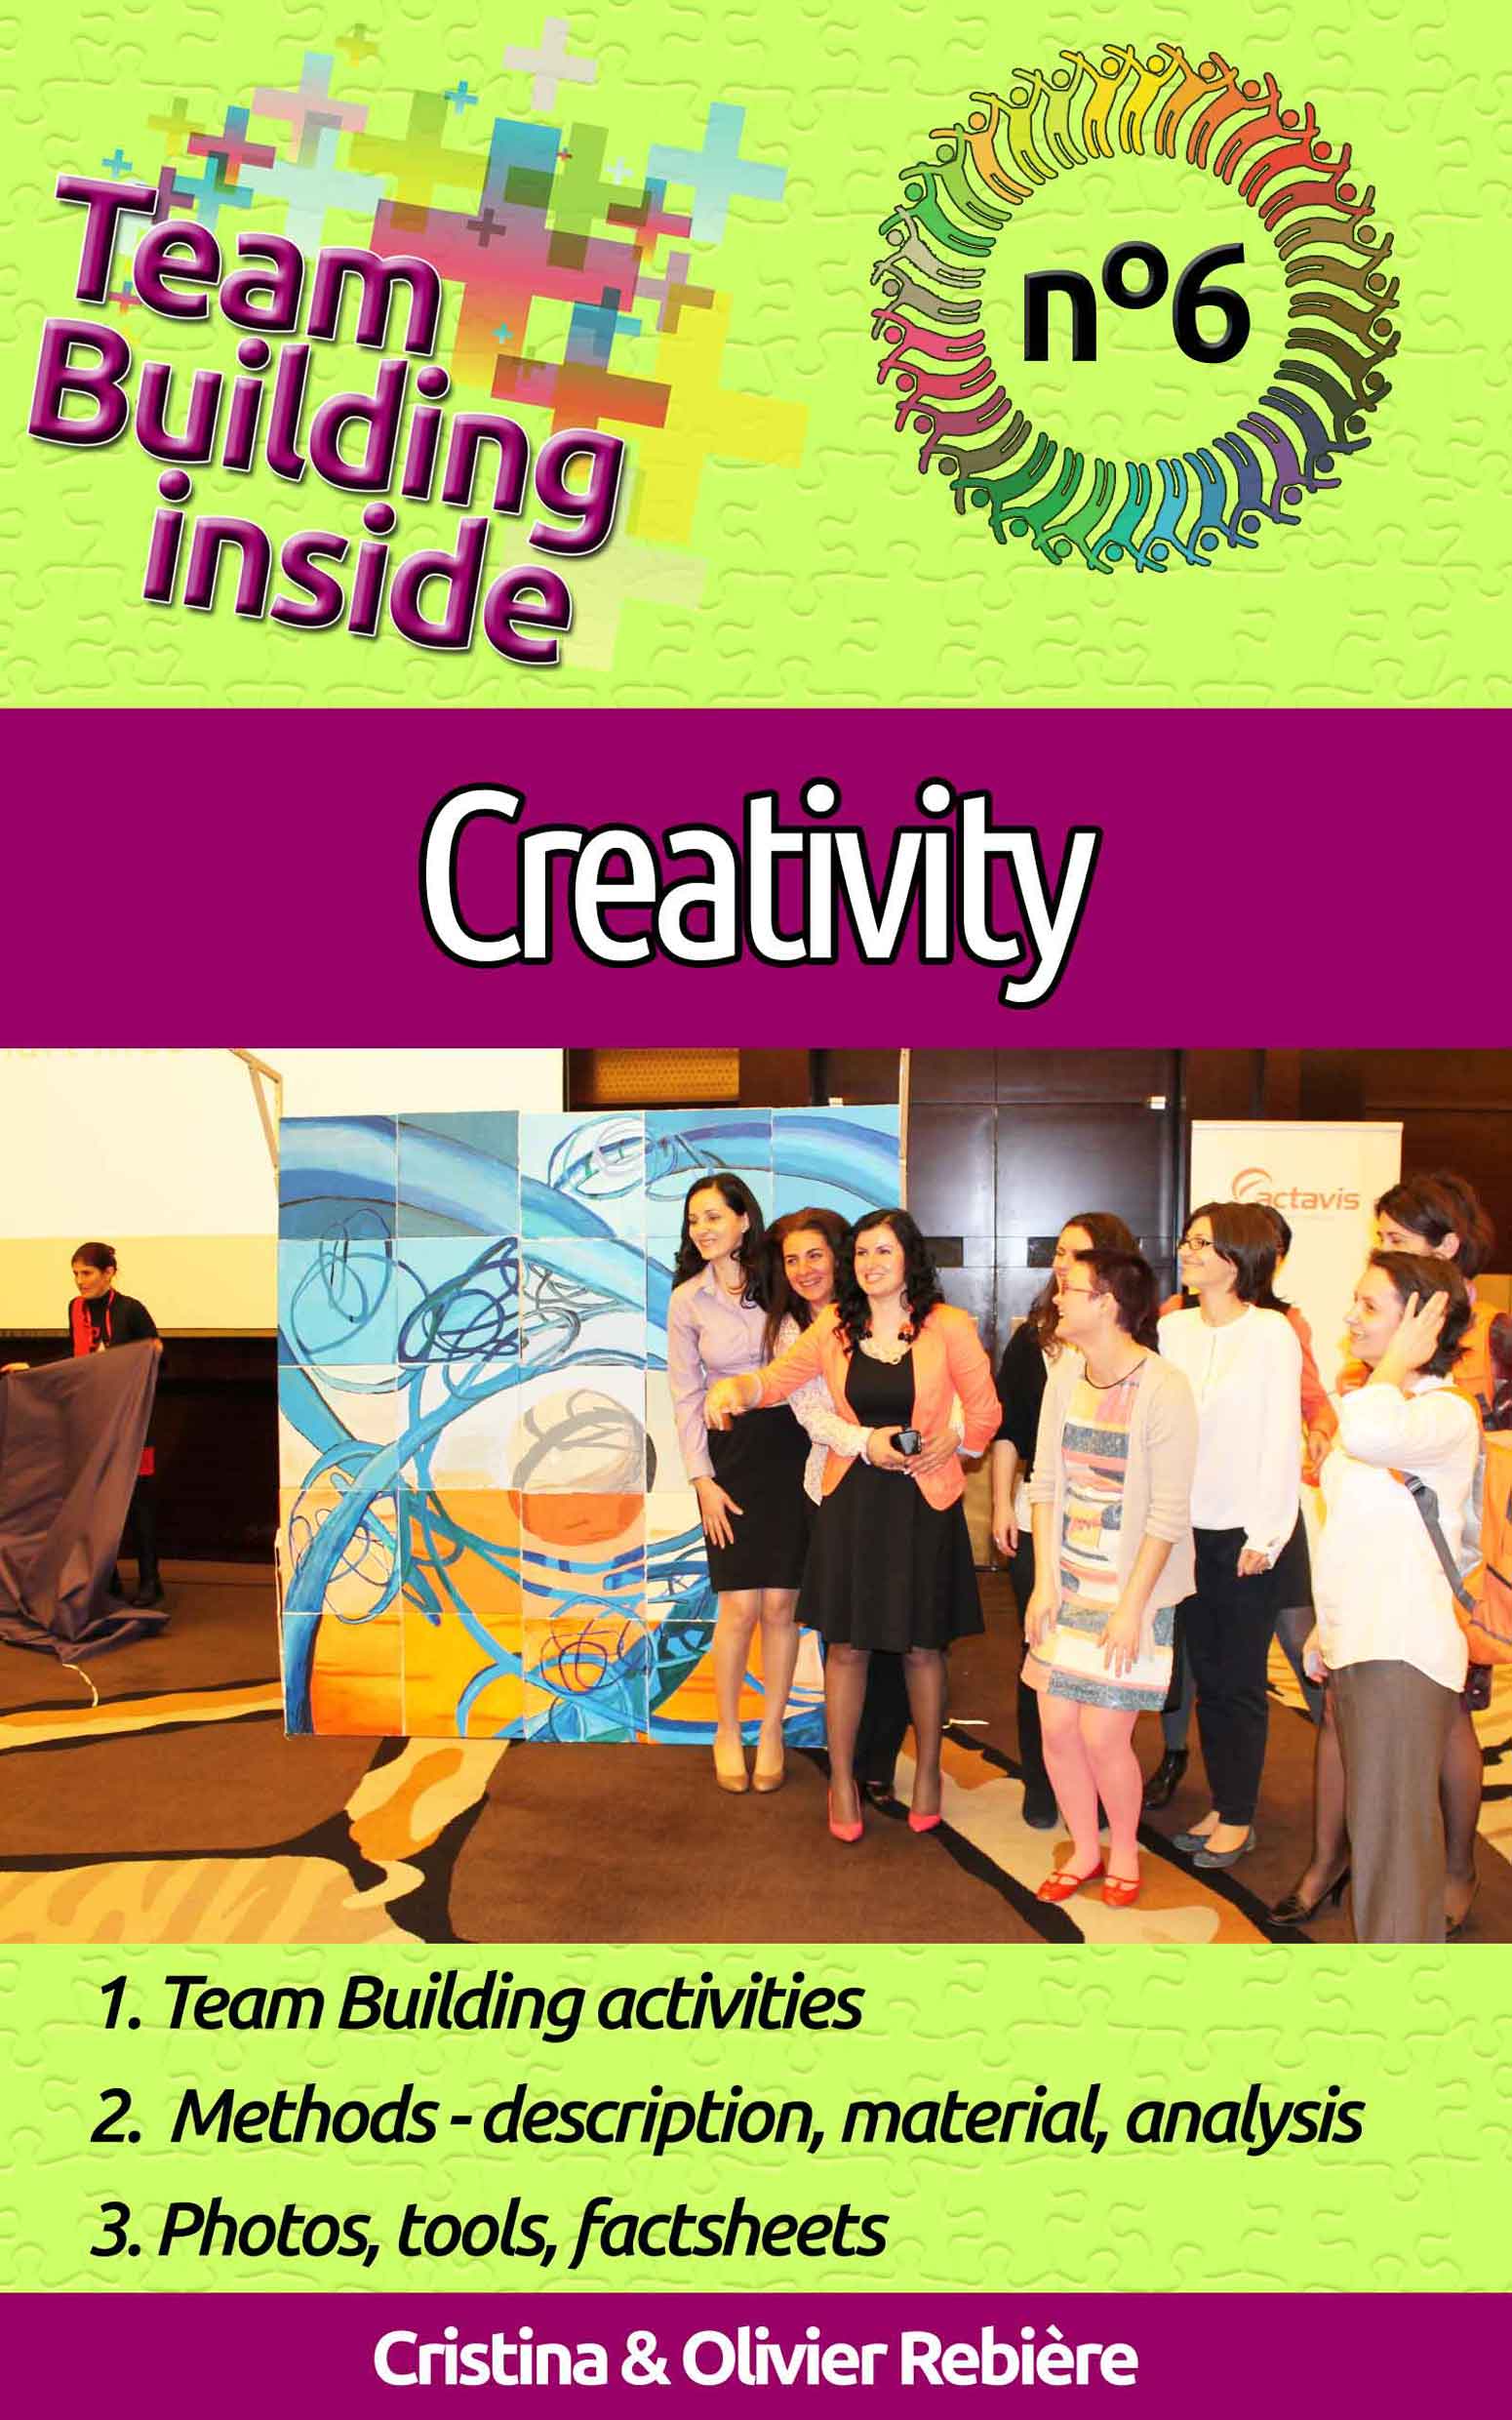 Team Building inside #6 - creativity - Cristina Rebiere & Olivier Rebiere